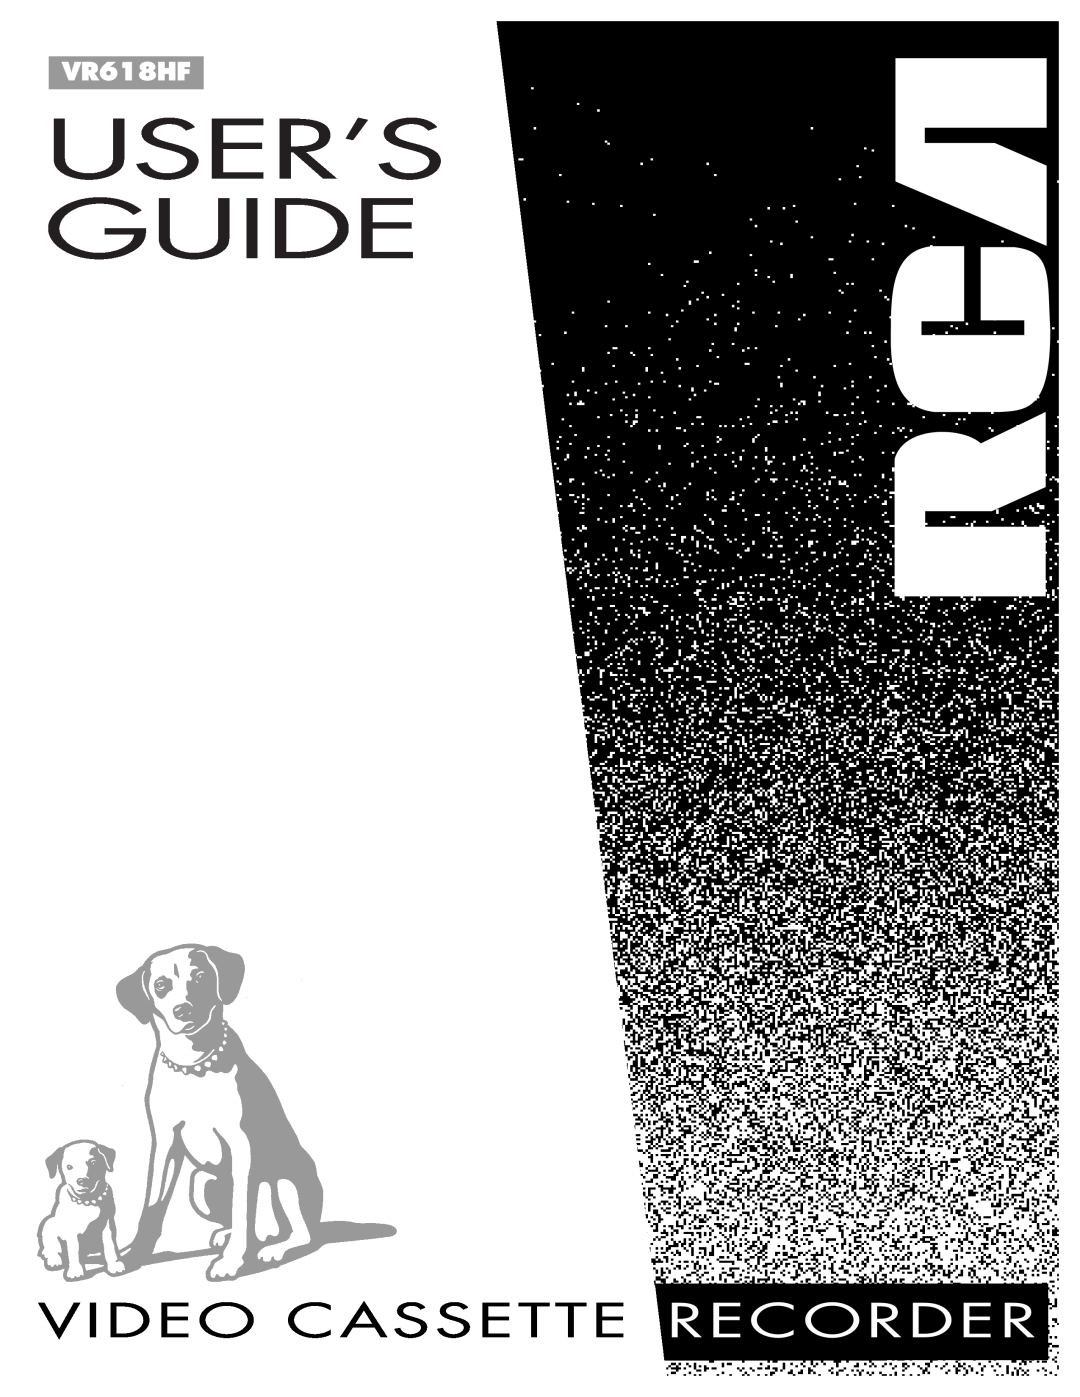 RCA VR618HF manual User’S Guide, Video Cassette Recorder 